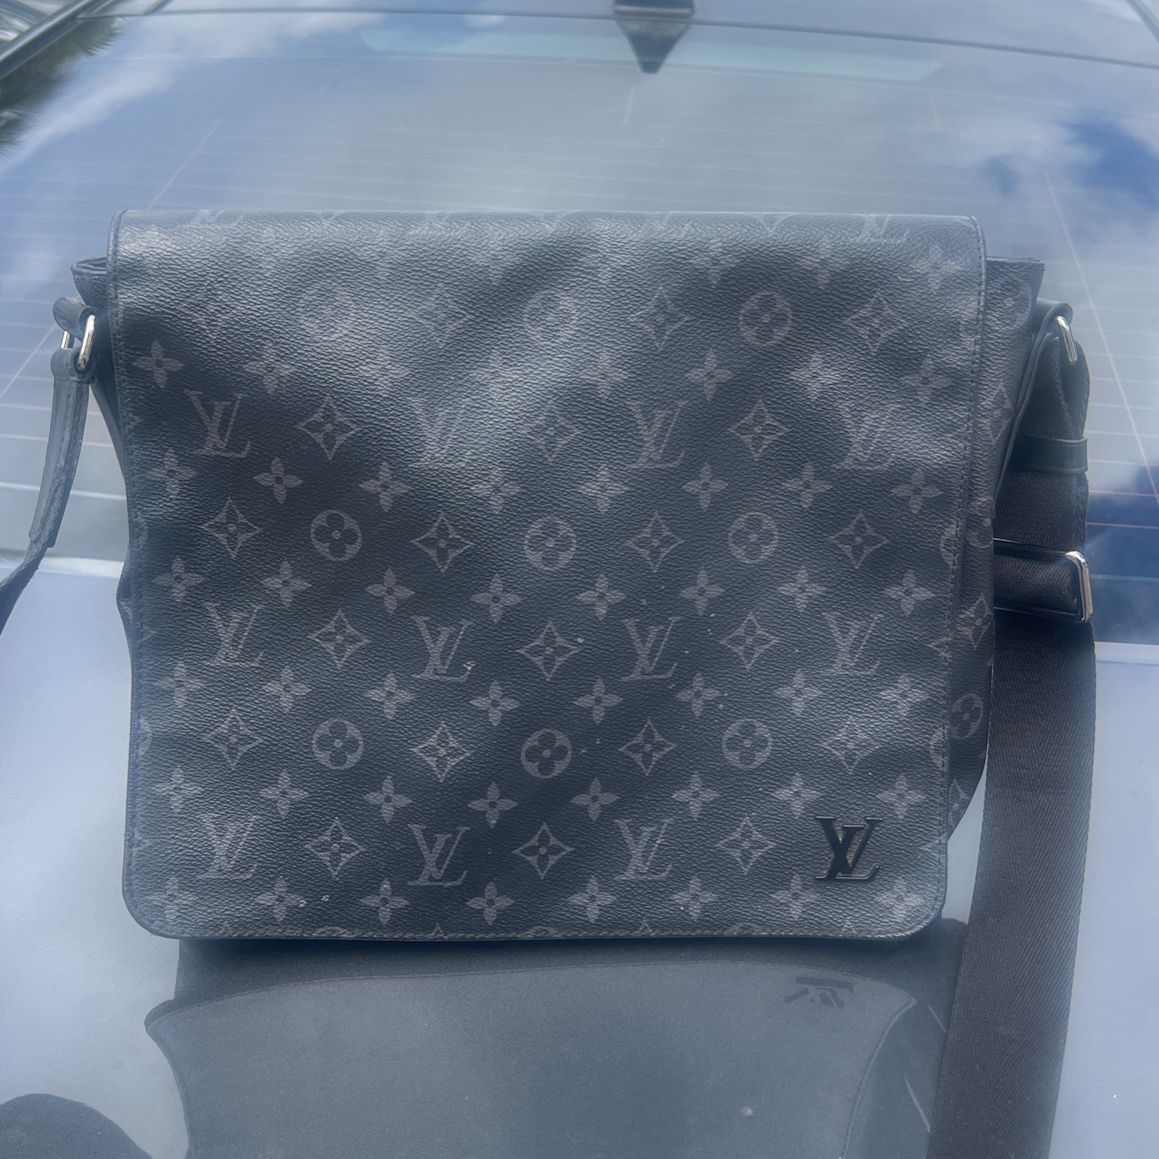 Louis Vuitton Crossbody Bag for Sale in Farmers Branch, TX - OfferUp